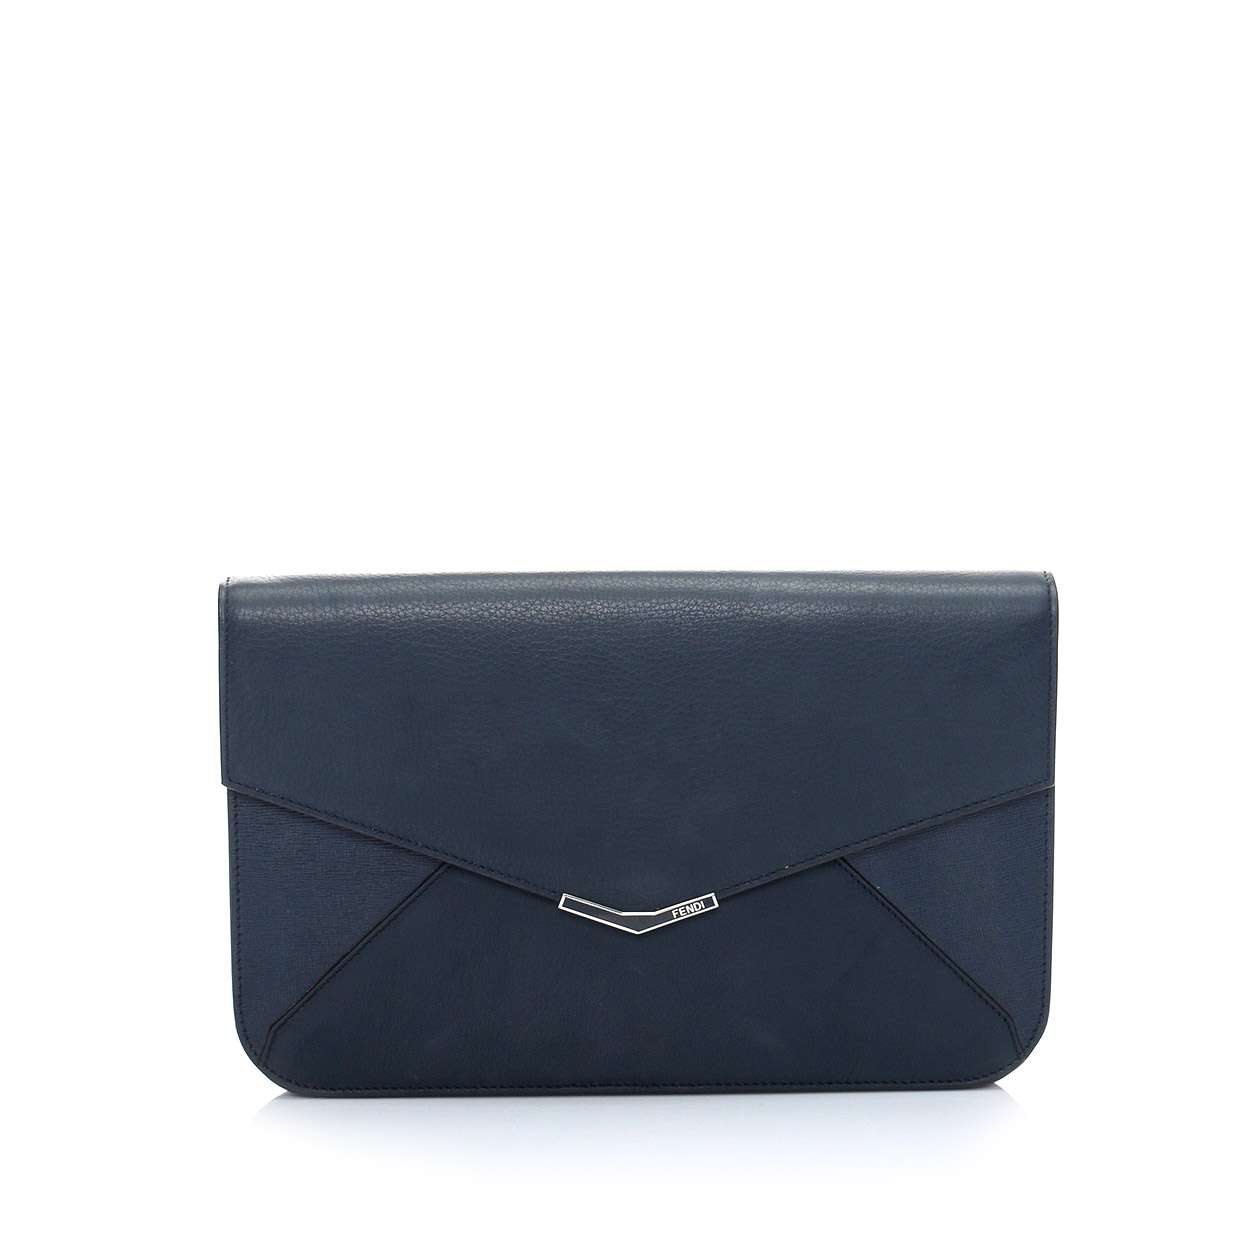 Fendi - Navy Blue Leather Geometric Envelope Clutch